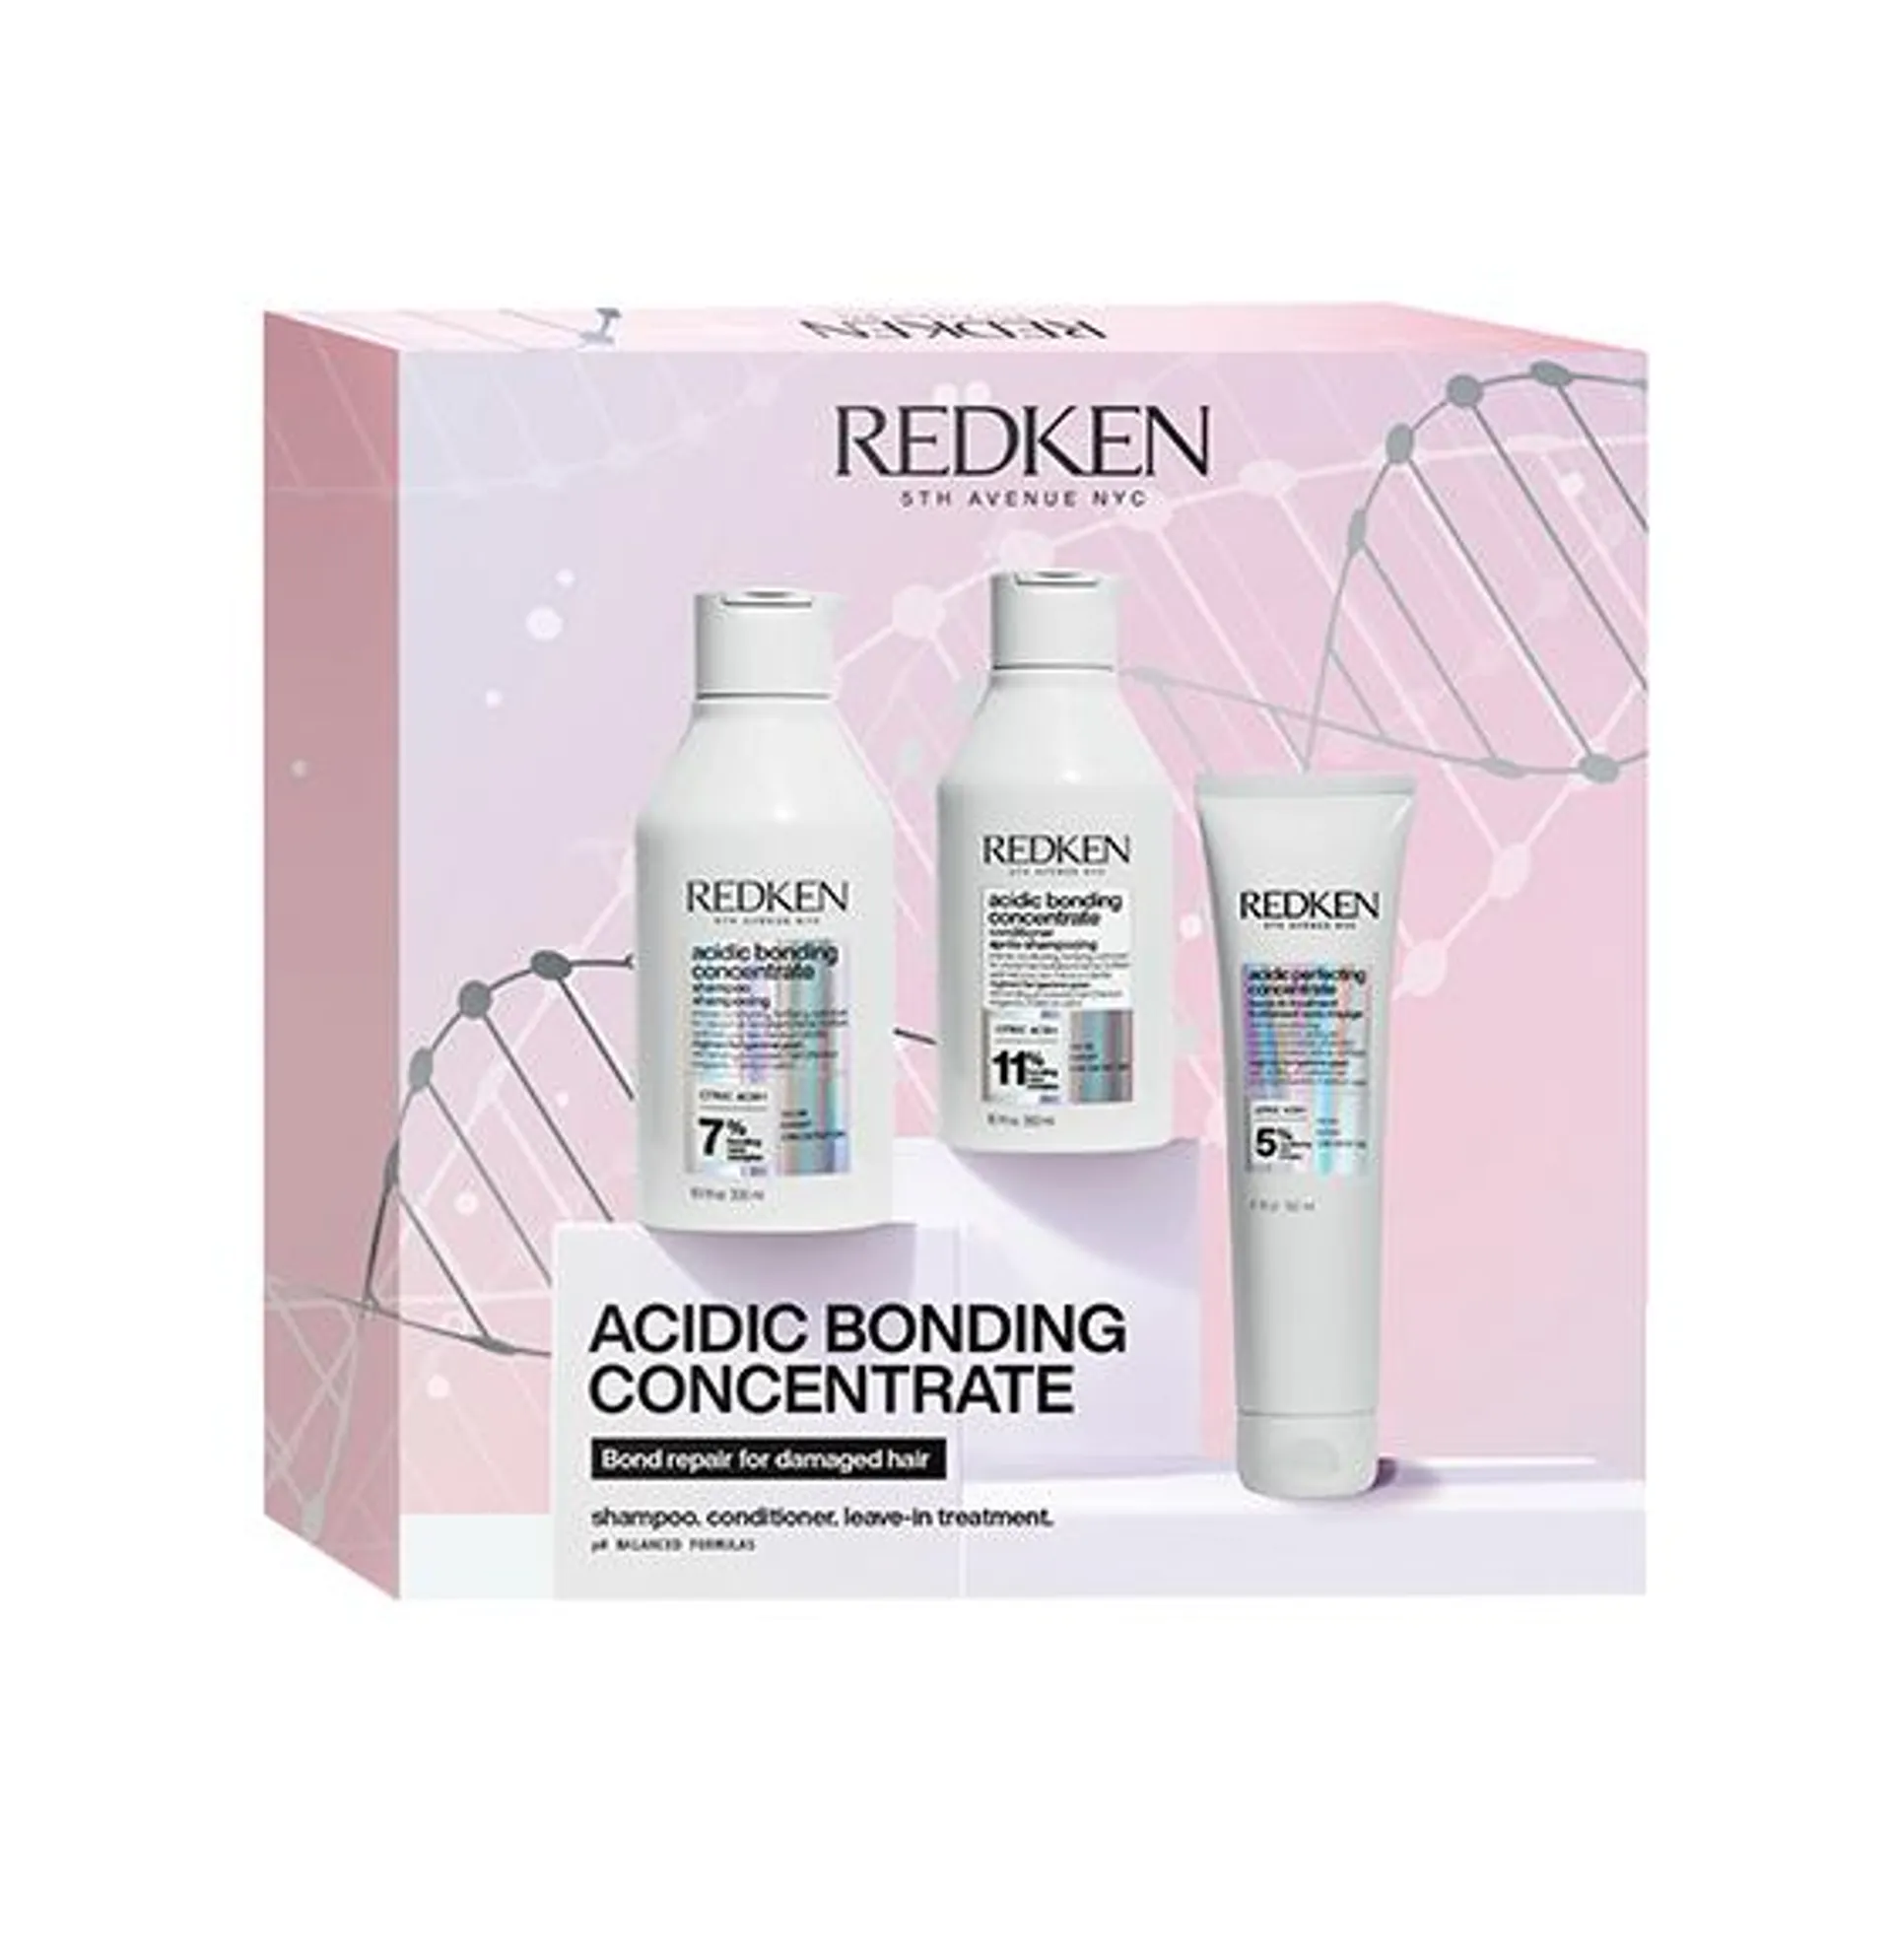 RedKen Acidic Bonding Concentrate Gift Set